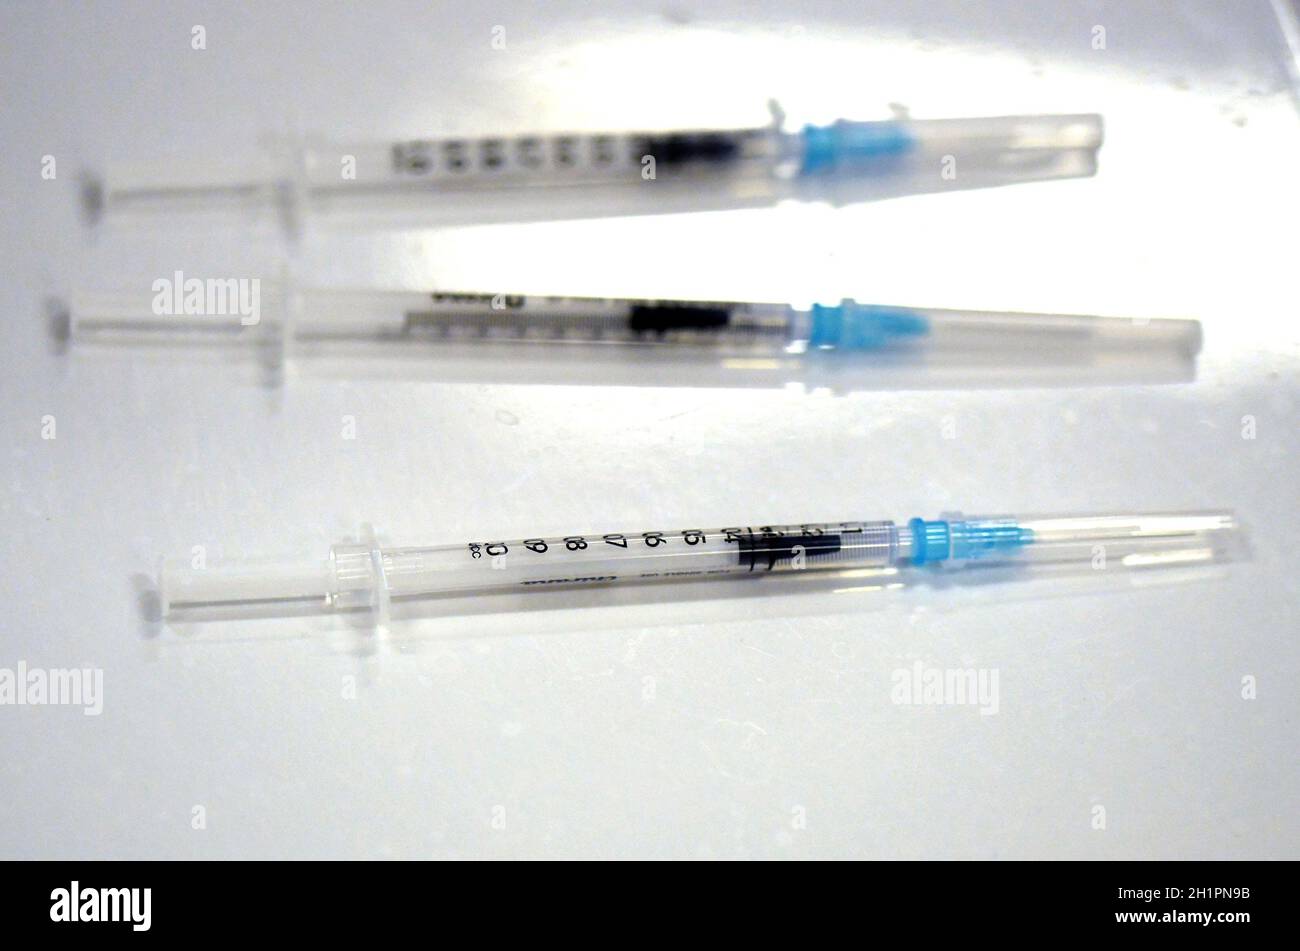 Corona Impfung in Österreich (Europa) - Covid Impfung mit dem Impfstoff Comirnaty von Biontech Pfizer - Corona vaccination in Austria (Europe) - Covid Stock Photo